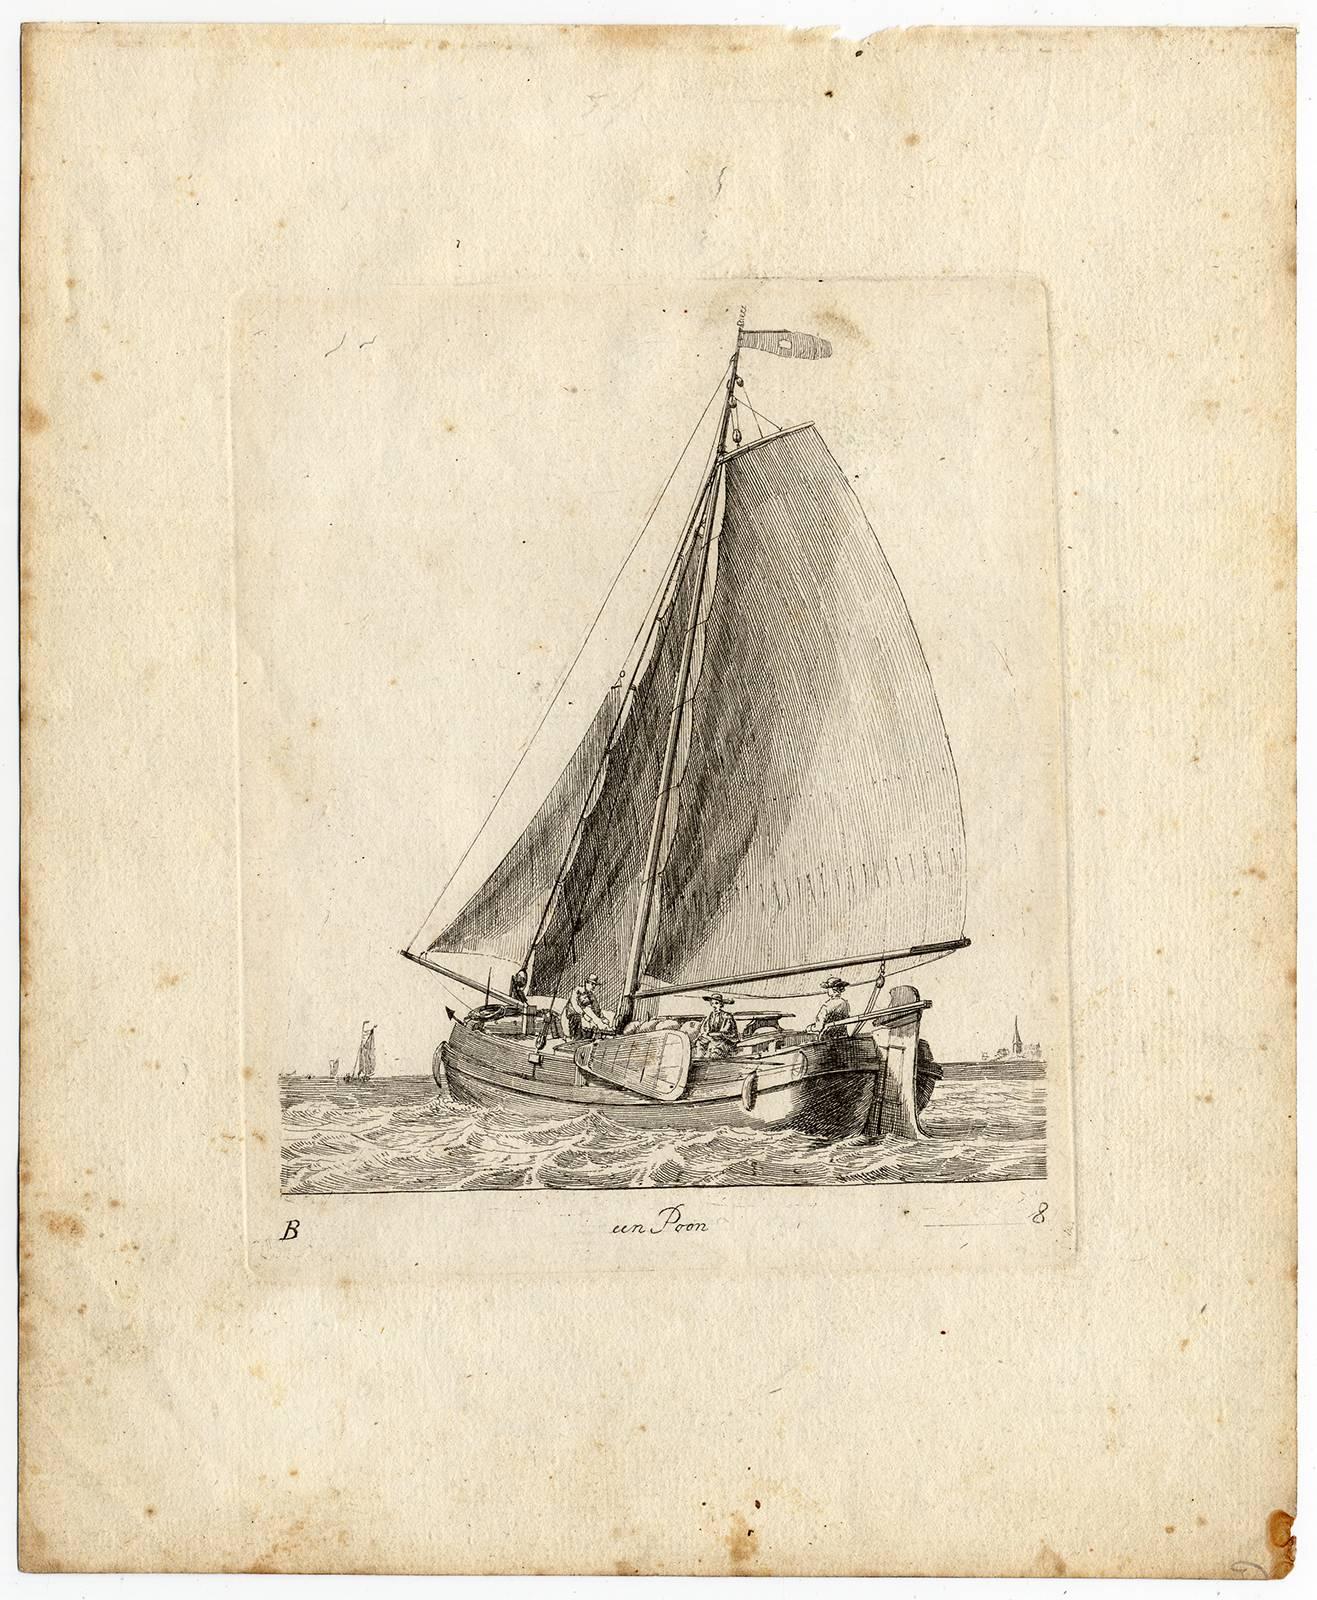 Gerrit Groenewegen Figurative Print - Een Poon. A flat-bottom sailing freight ship ship called a Poon.